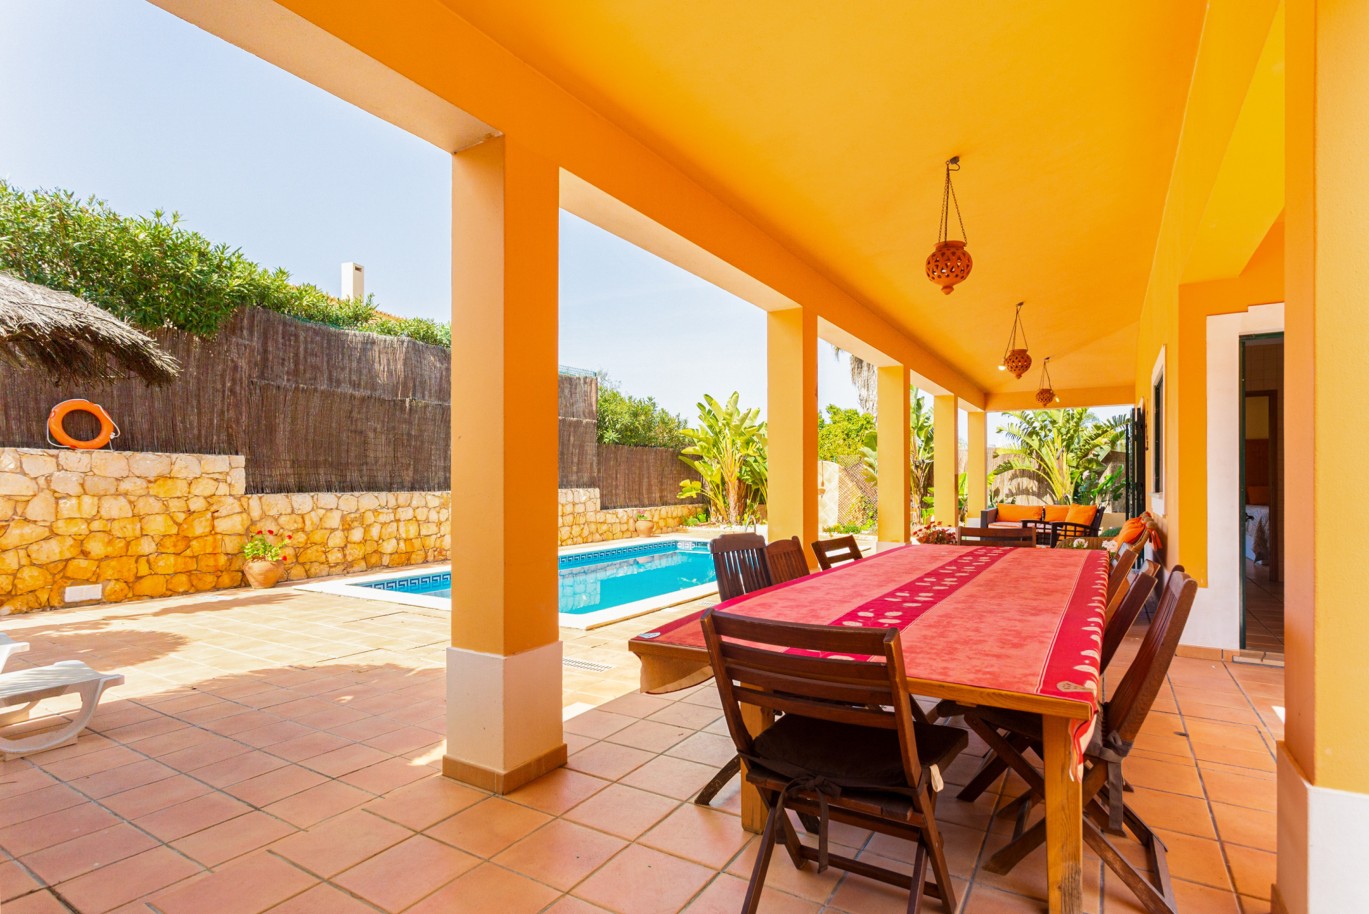 5 Bedroom Villa with 2 Bedroom Annex, for sale, in Alvor, Algarve_220980